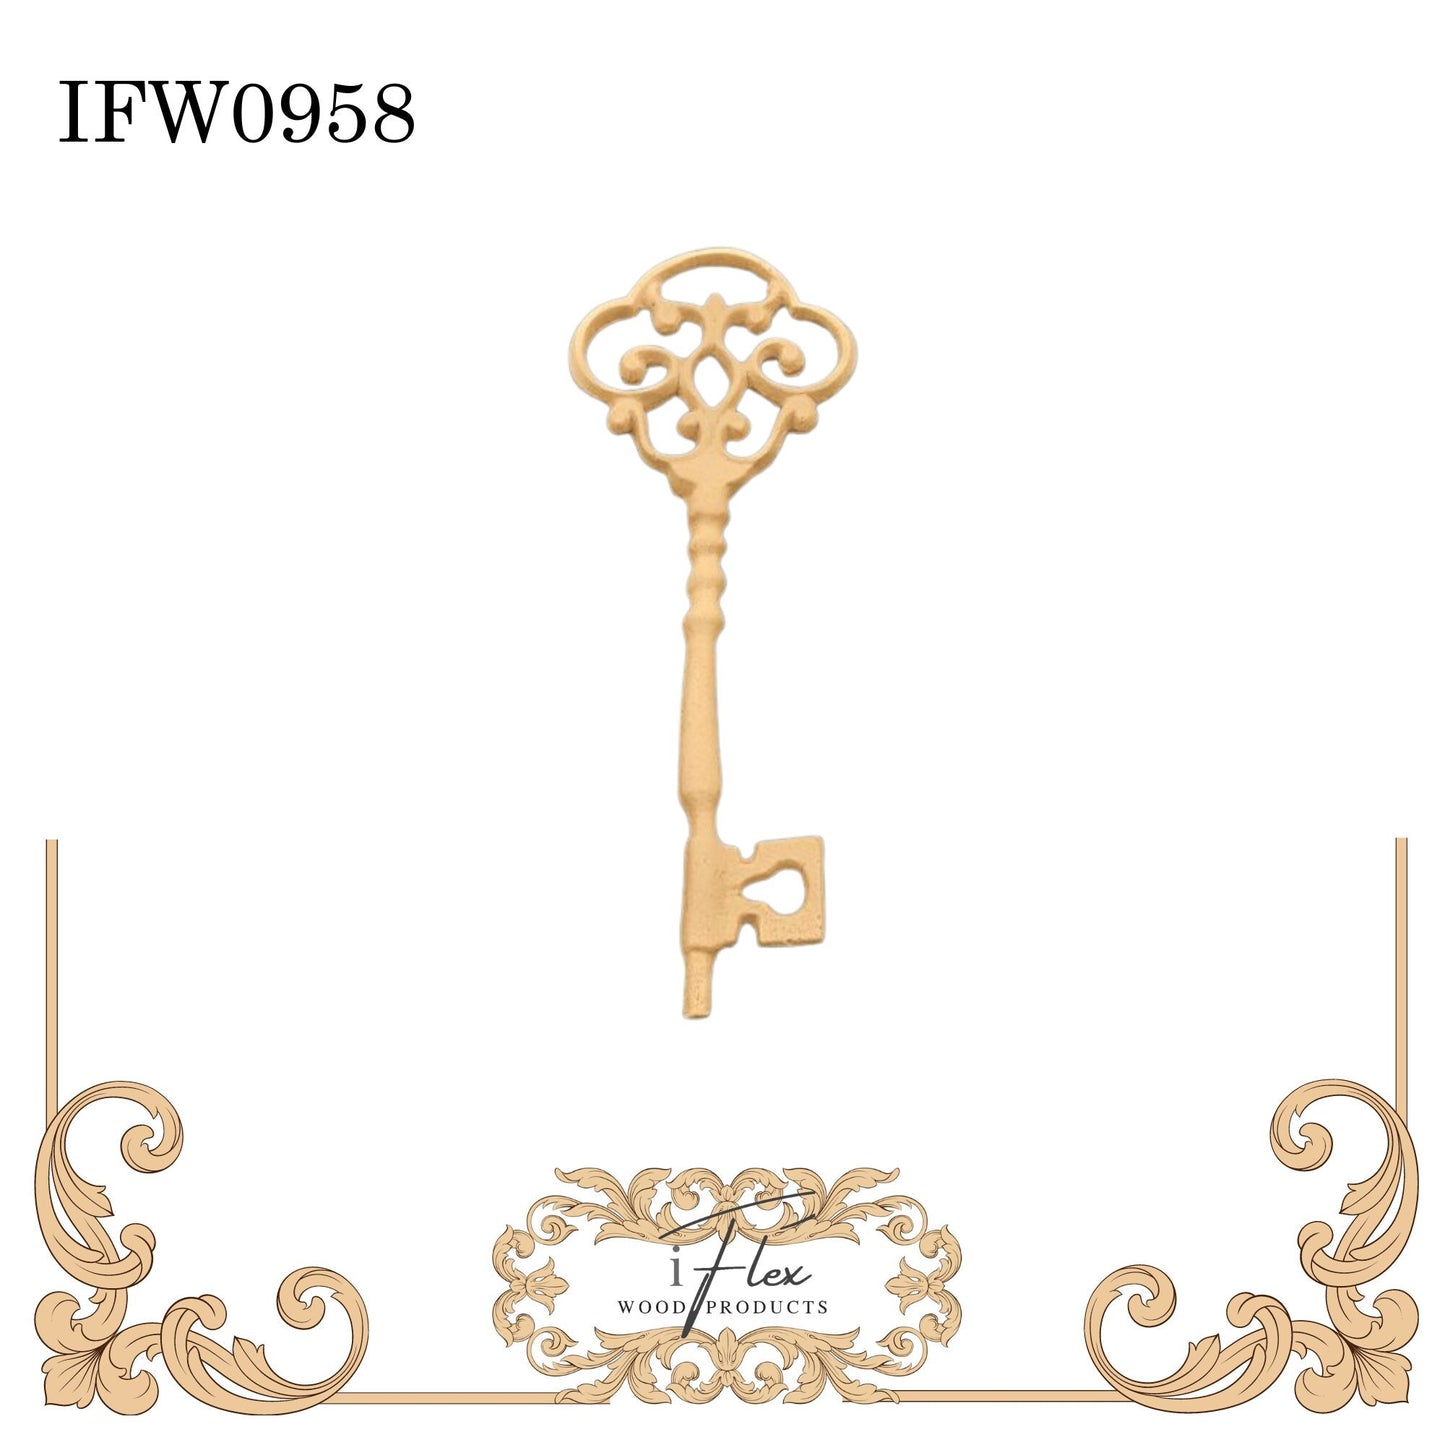 IFW 0958  iFlex Wood Products keys bendable mouldings, flexible, wooden appliques, Santa key